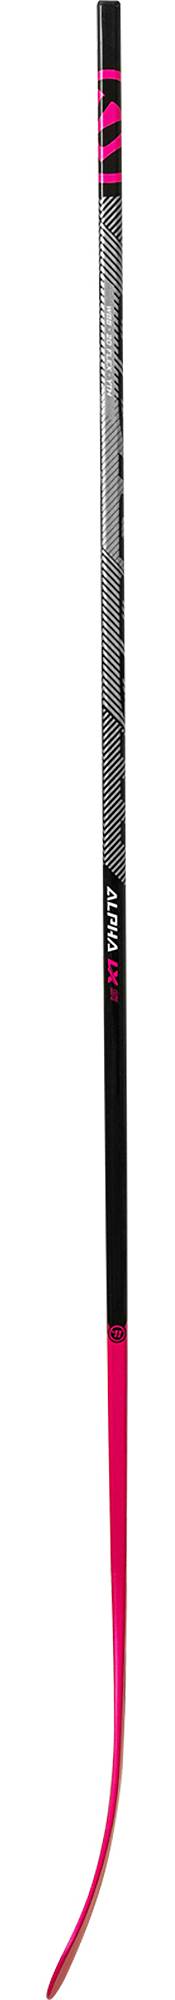 Warrior Alpha LX Ice Hockey Stick -  Youth product image